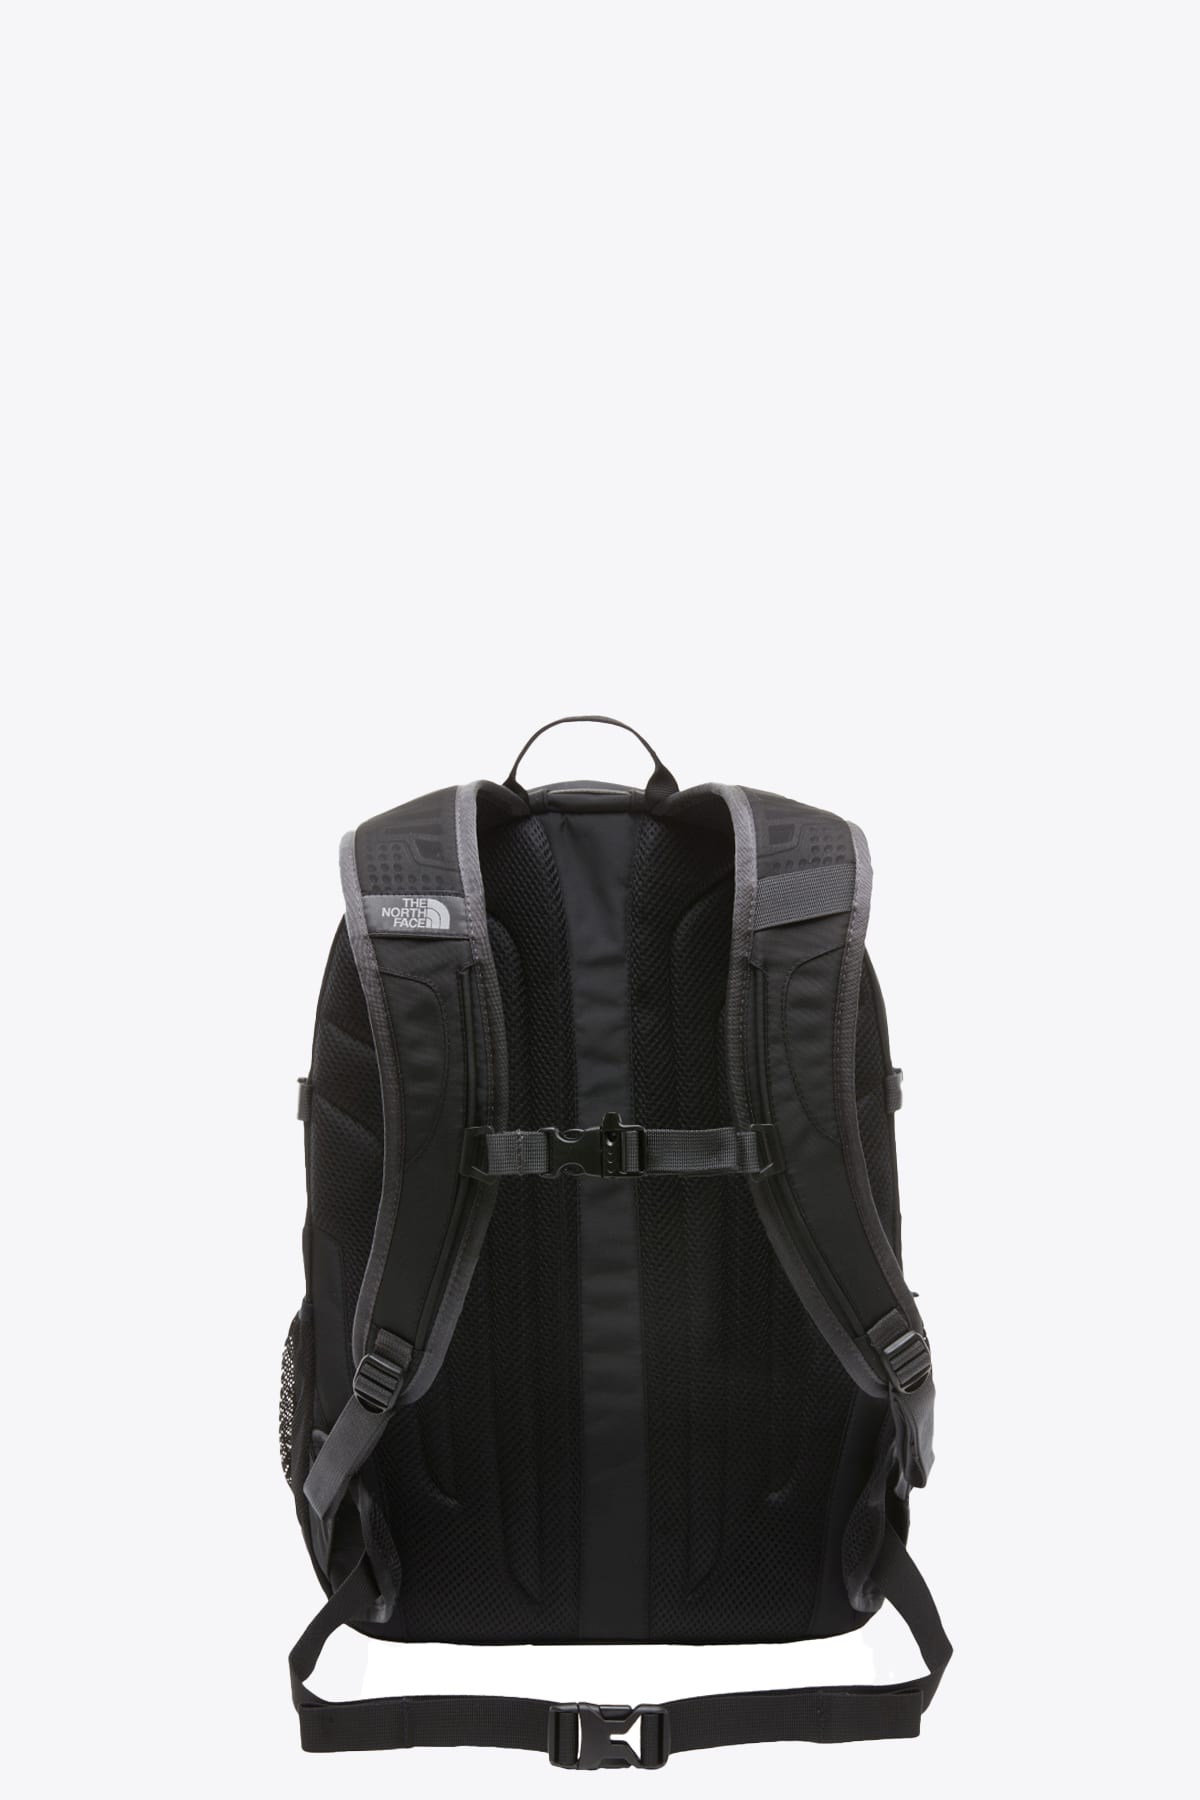 The North Face Borealis Classic Black nylon backpack - Borealis classic